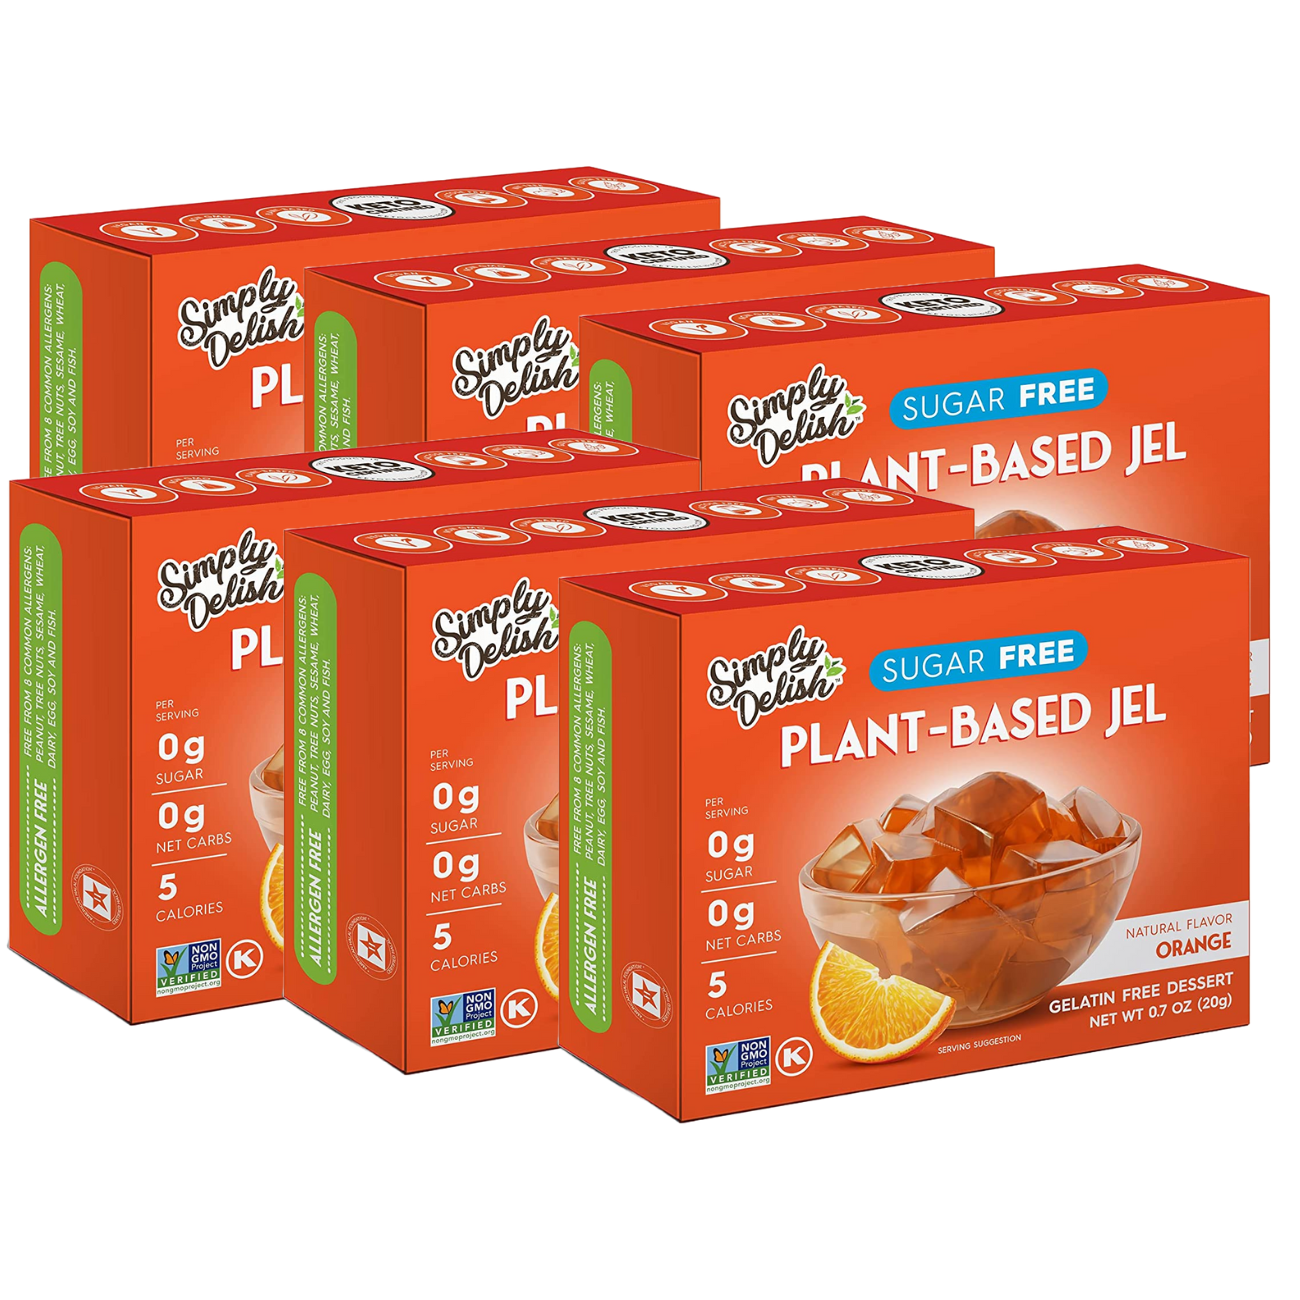 #Flavor_Orange (0.7oz) #Size_6-Pack